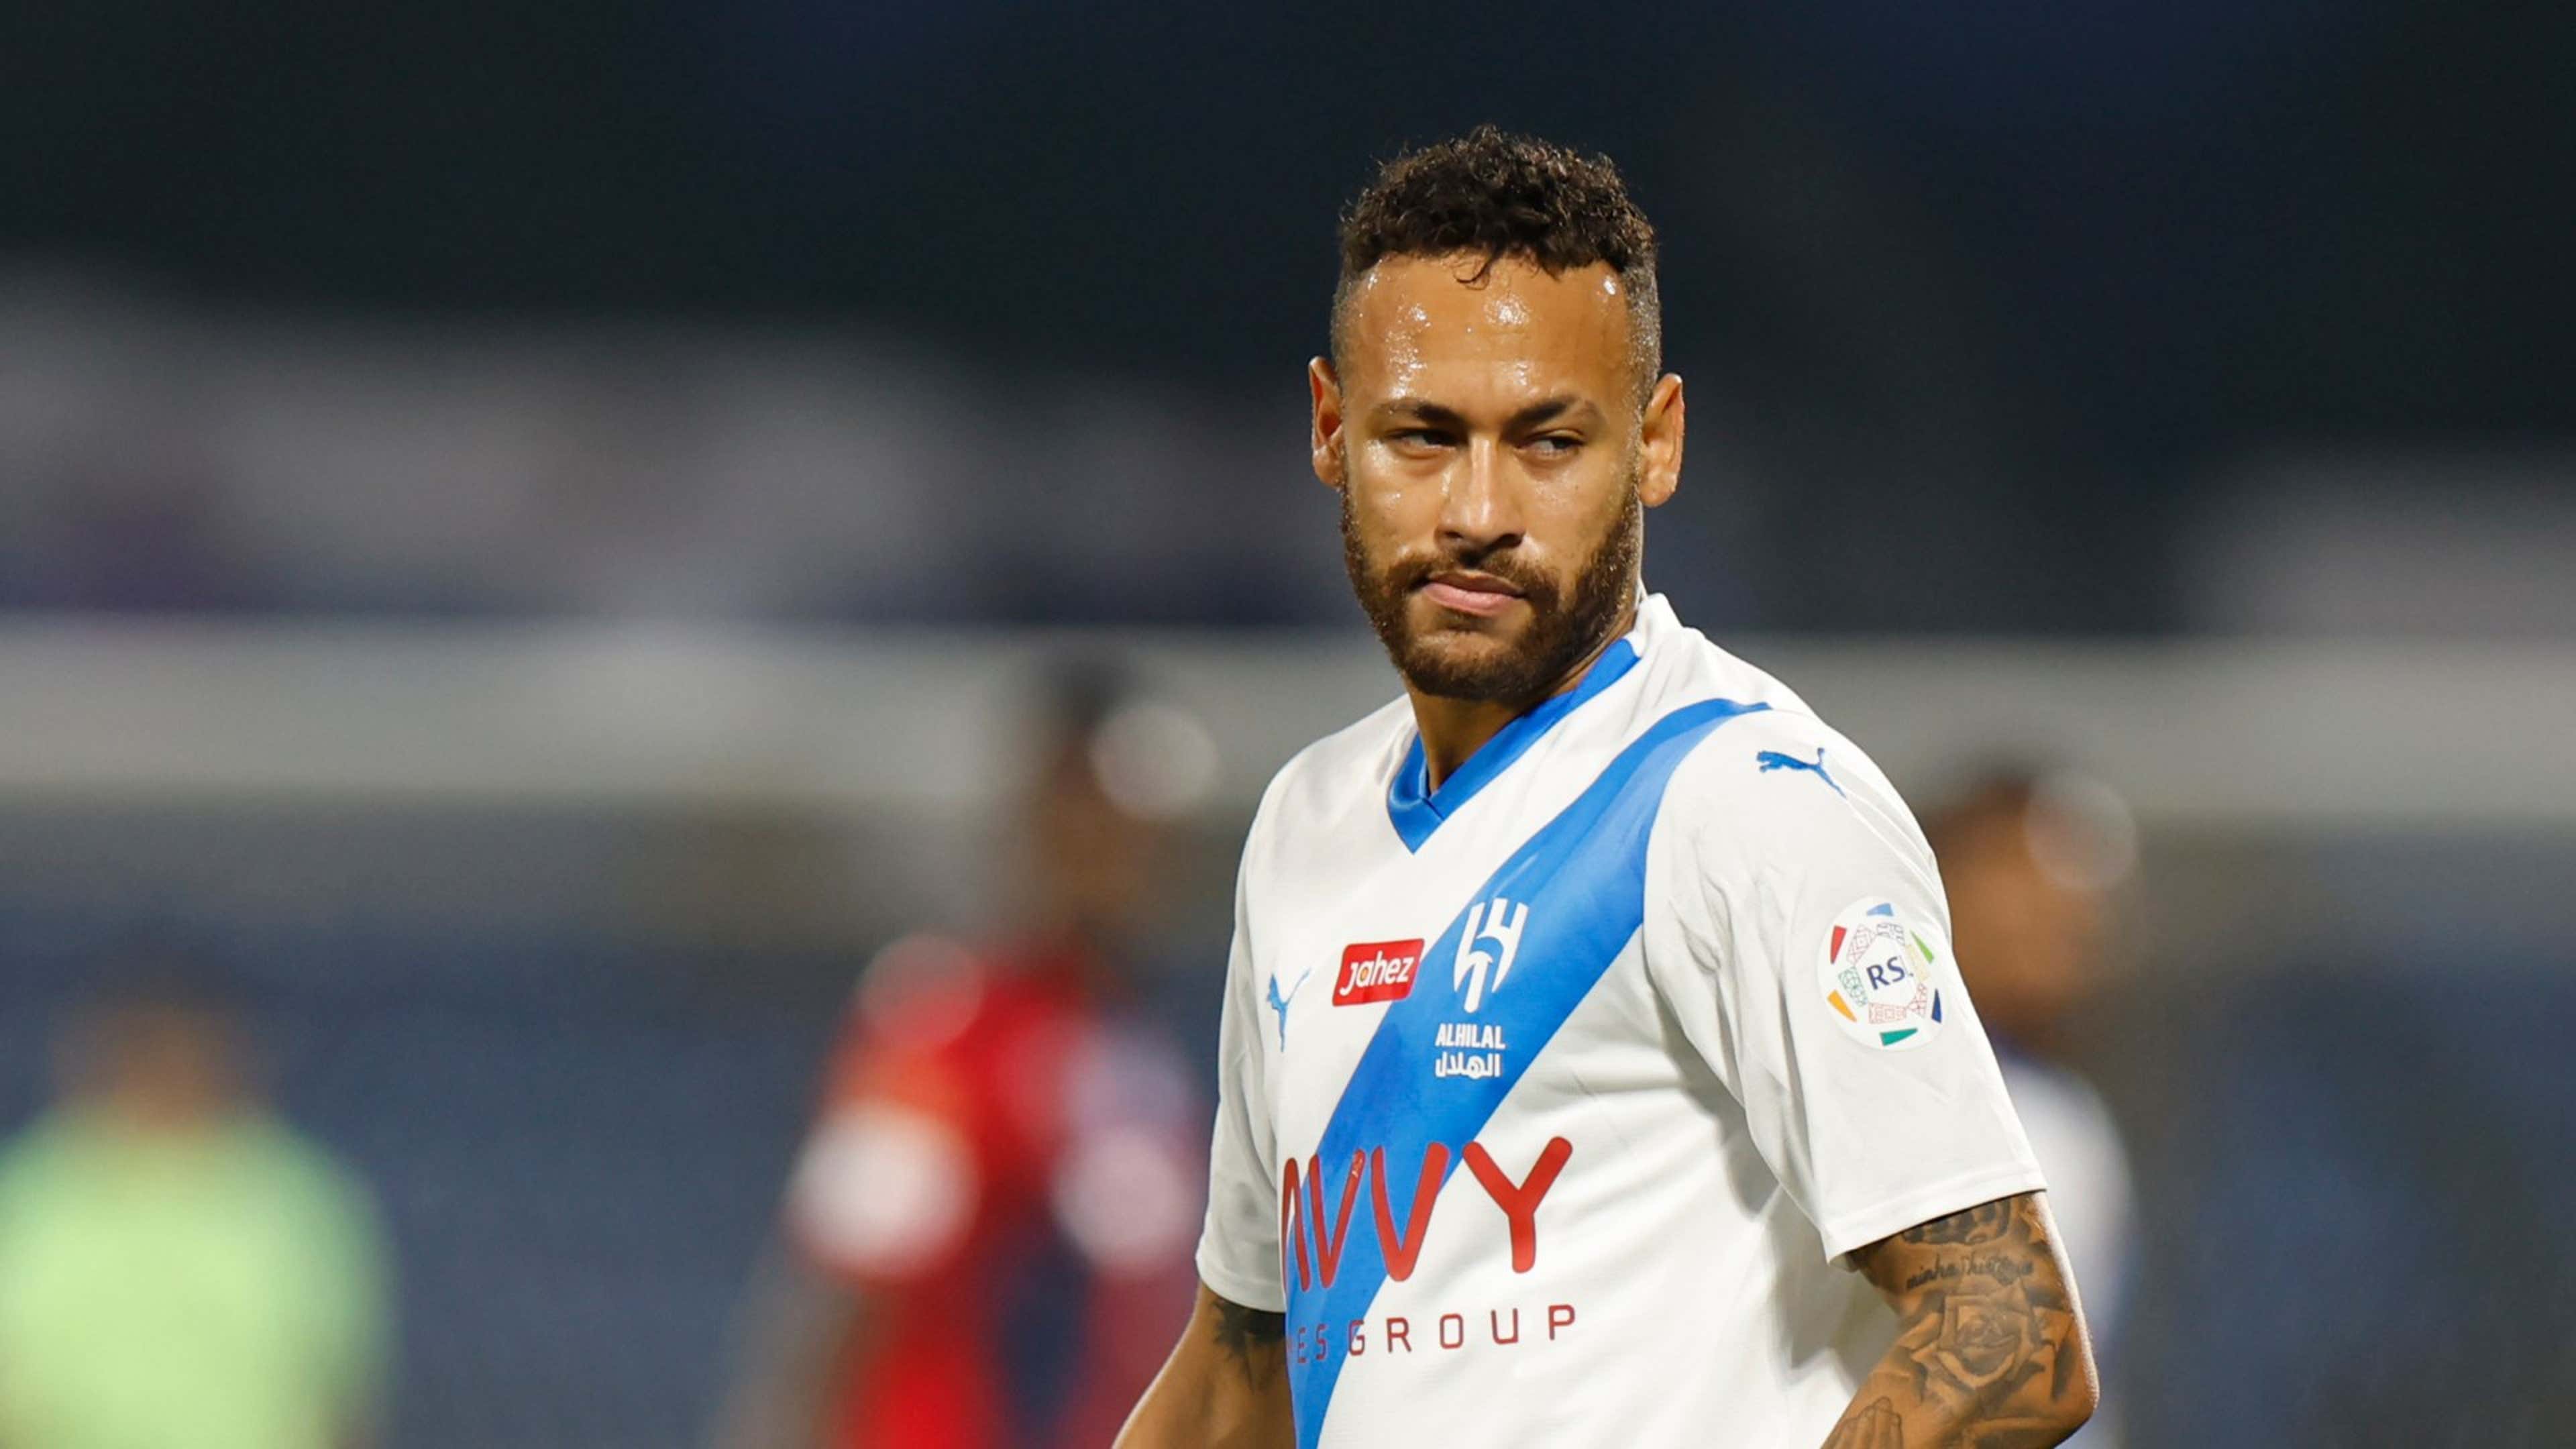 Soccer-Neymar on target as Al-Hilal secure Asian Champions League